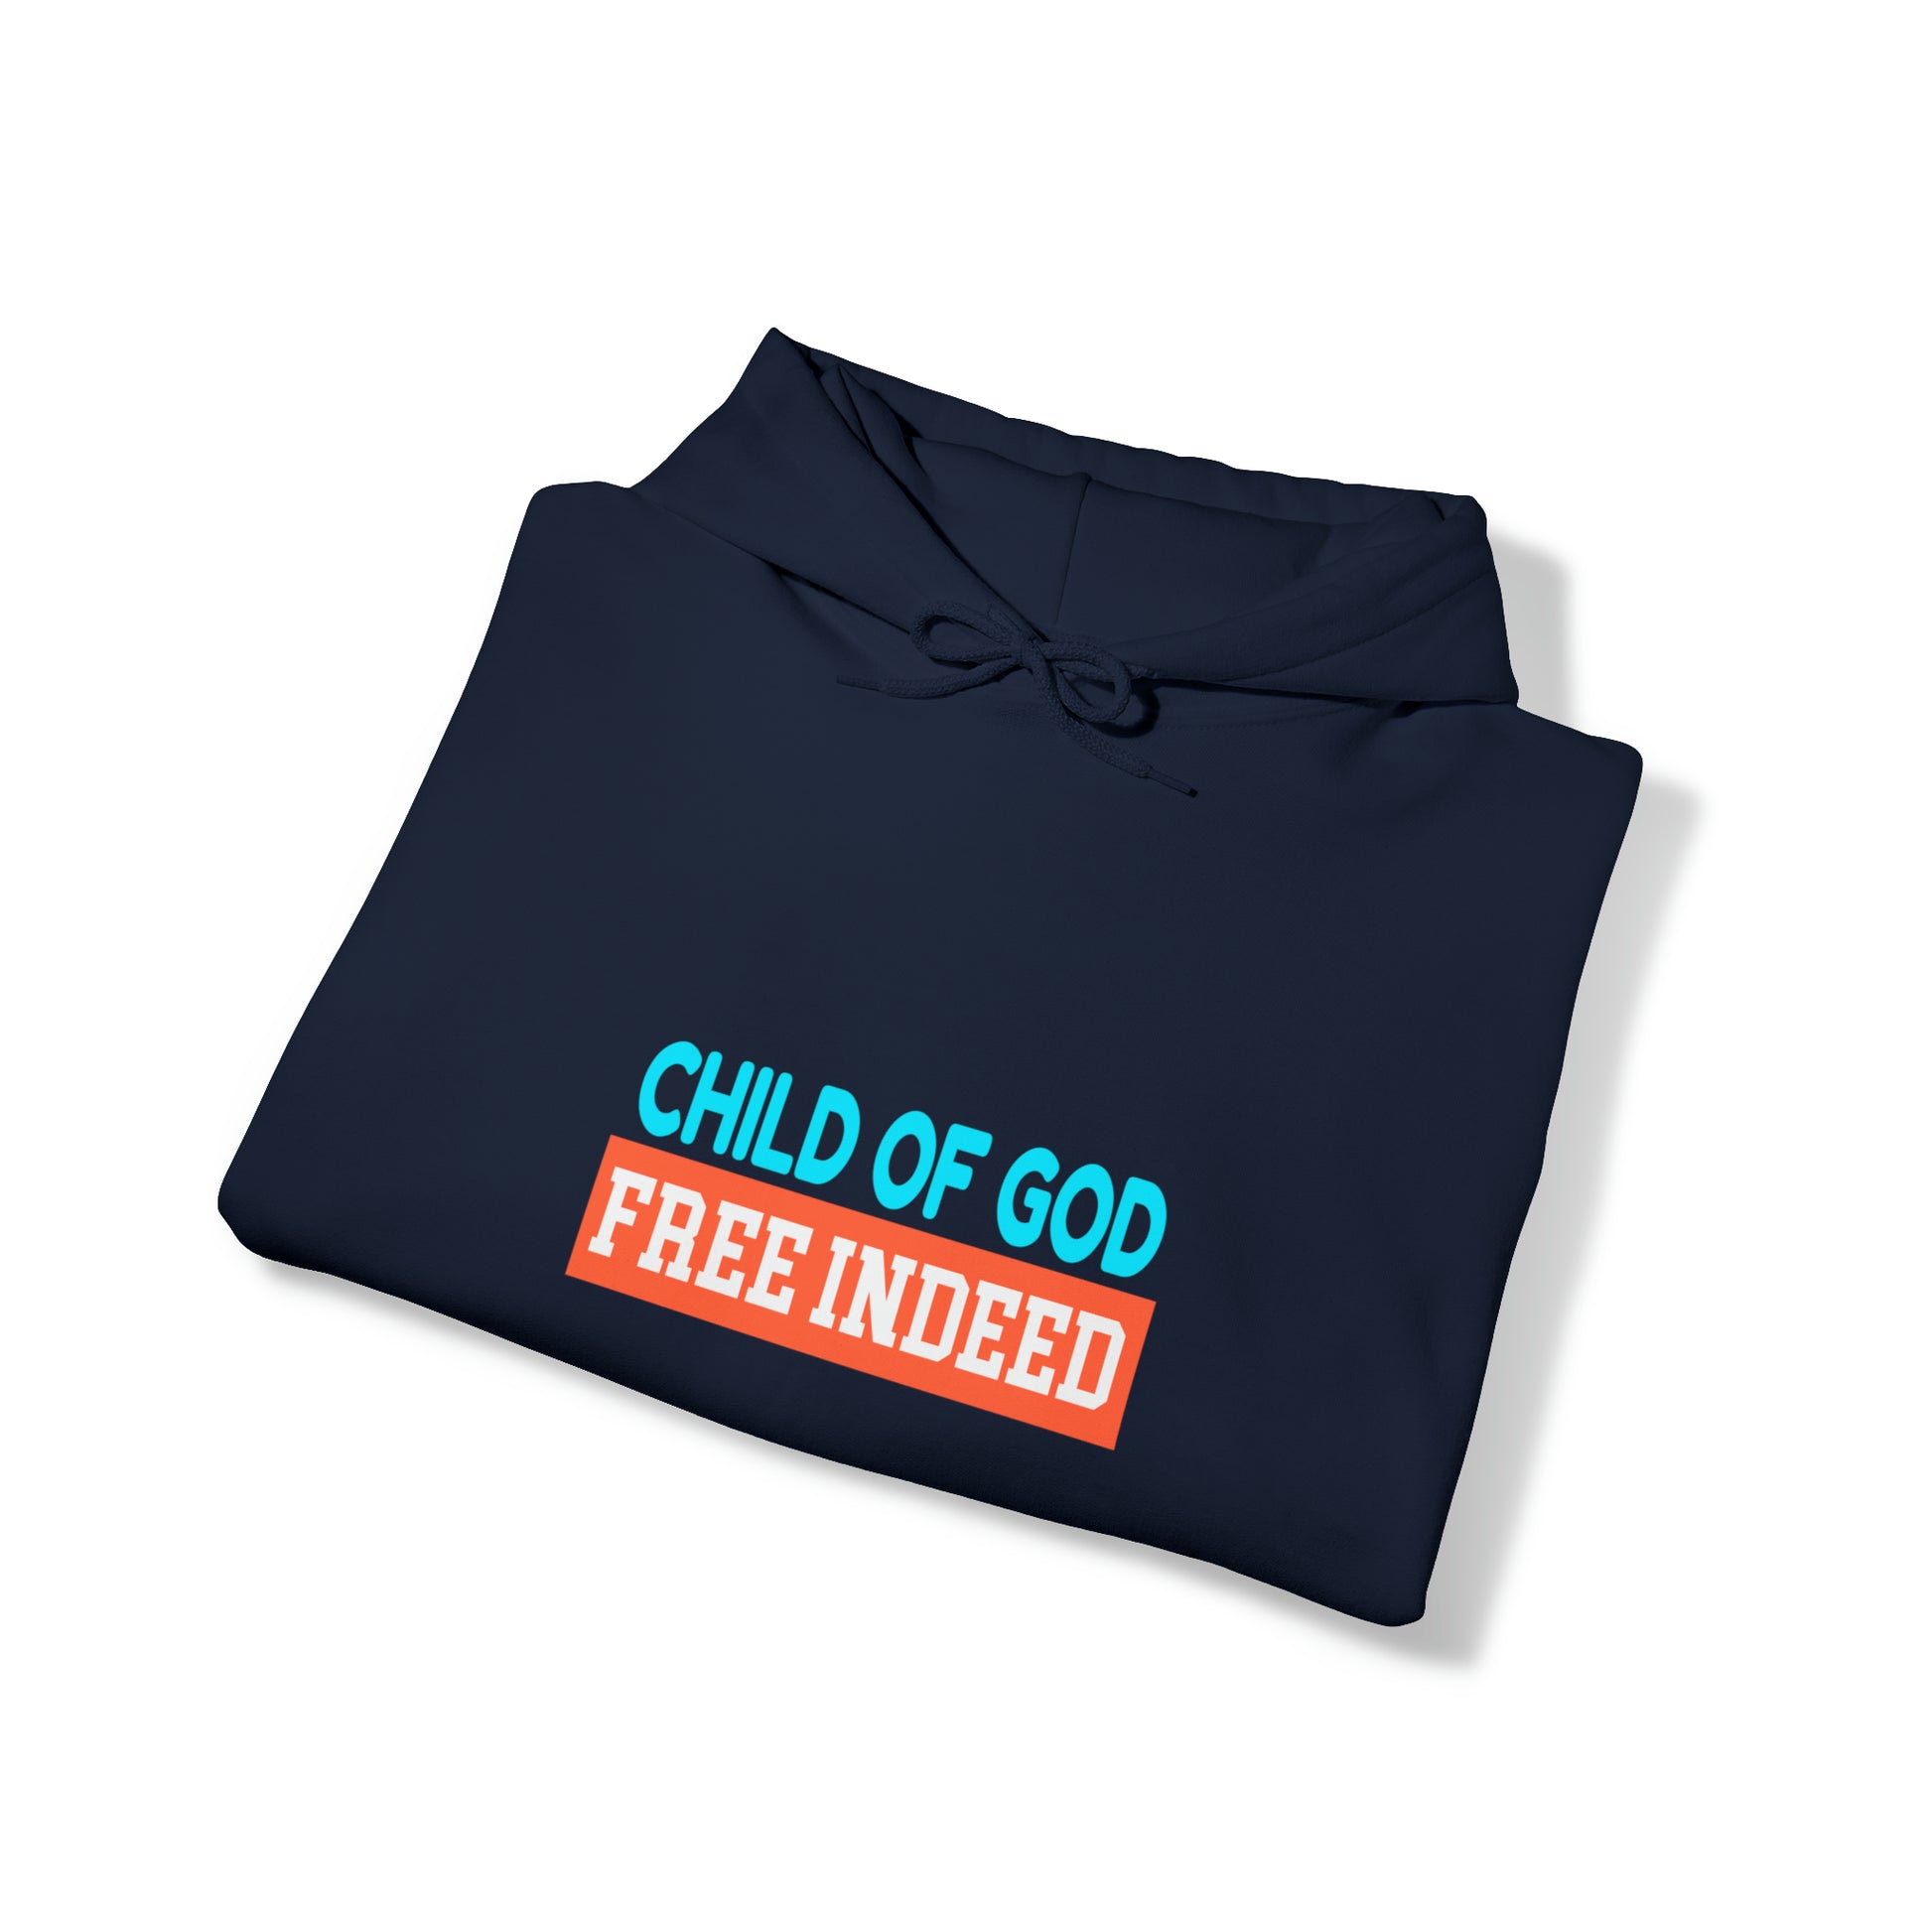 Child Of God Free Indeed Christian Unisex Pull On Hooded sweatshirt Printify